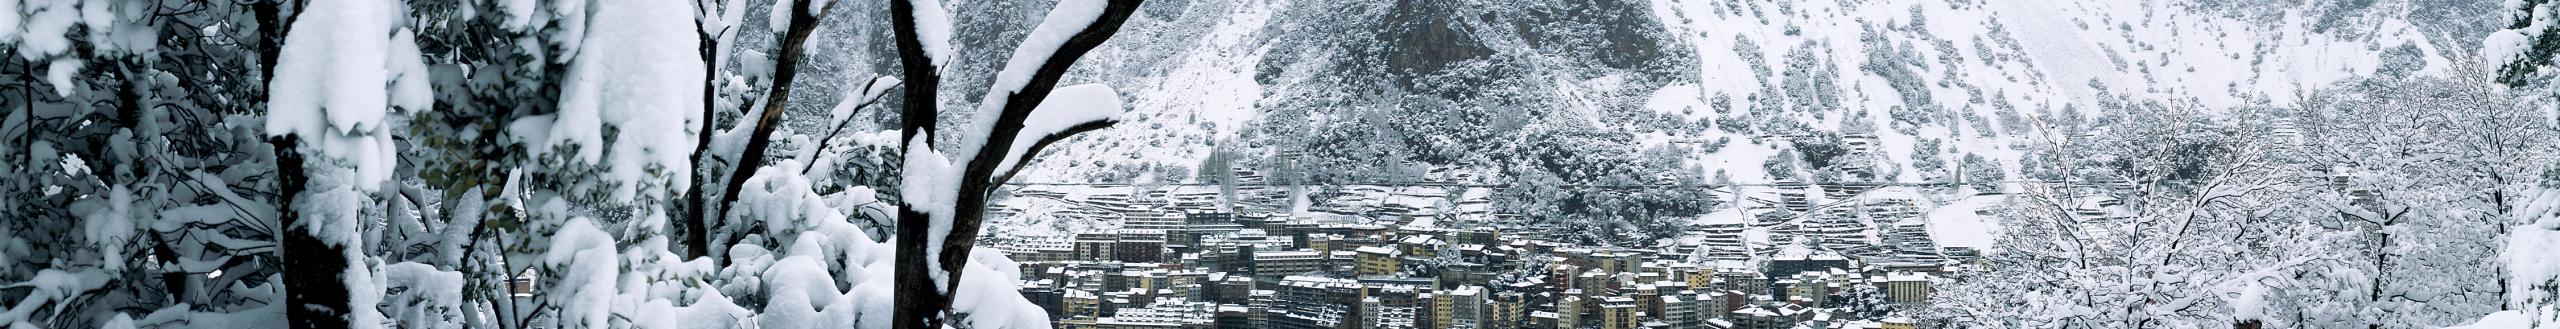 Habitacions Hotel Les 7 Claus Escaldes-Engordany Andorra